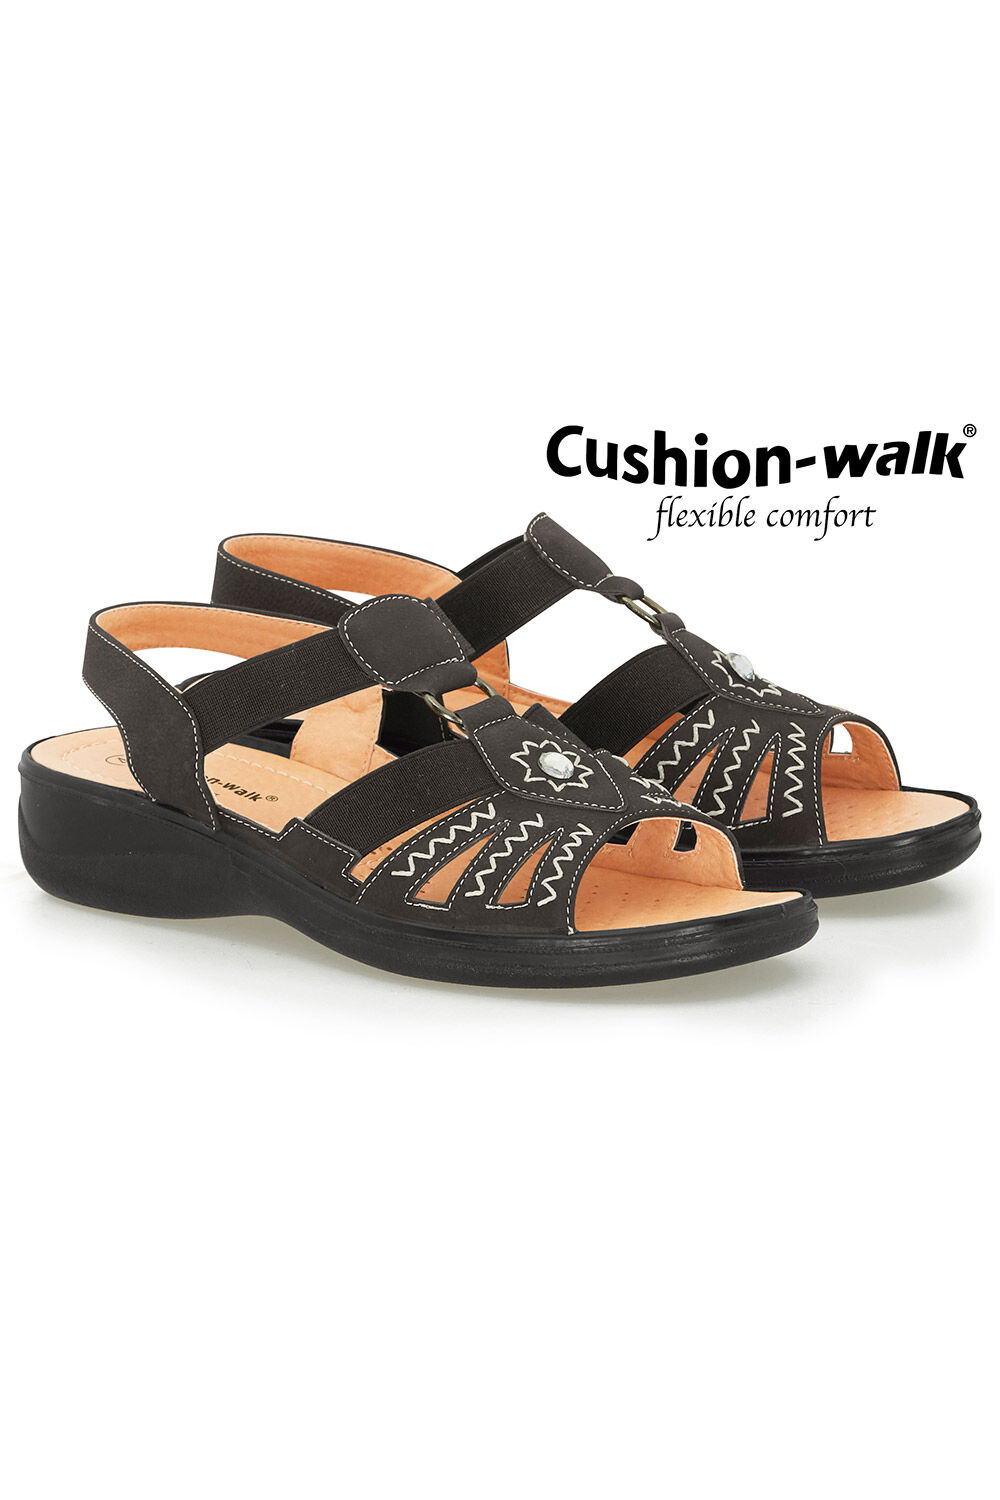 cushion walk shoes